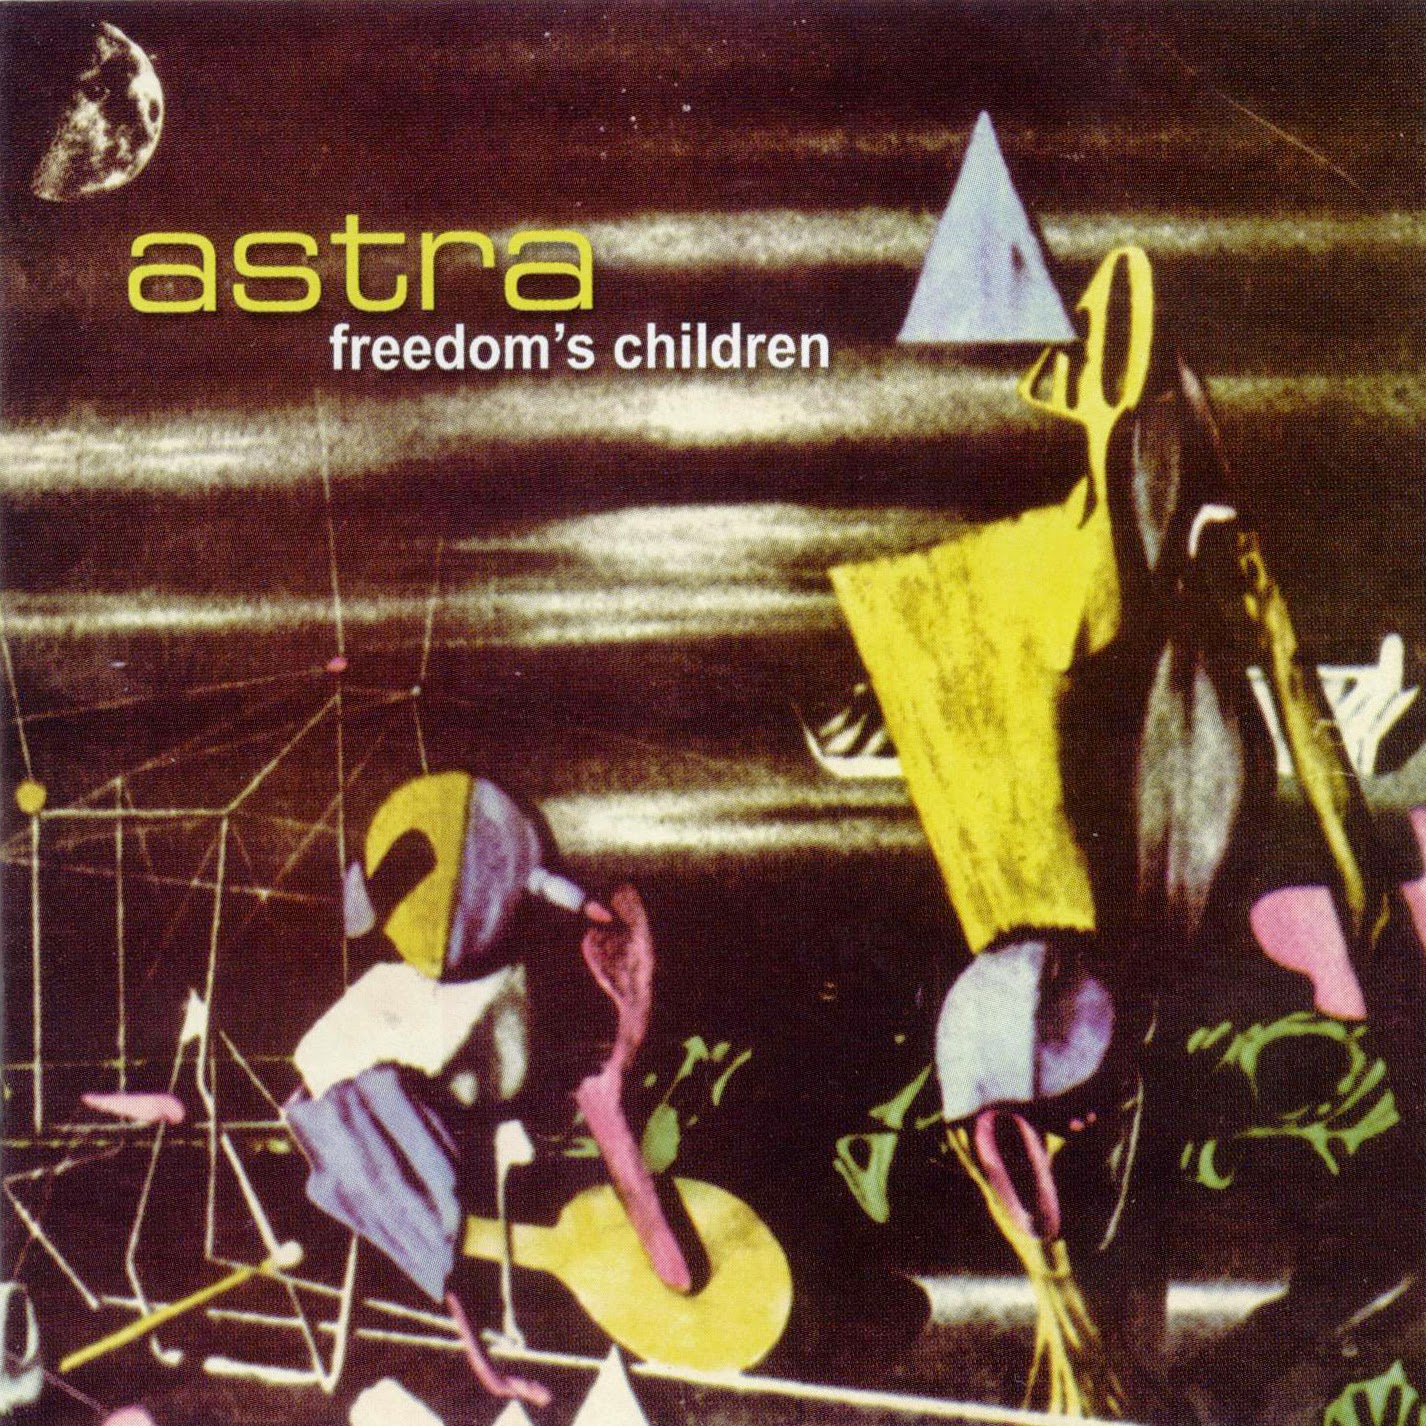 Freedom's children. Freedom's children - Astra (1970. Freedom's children - Galactic Vibes (1971). 1970'S children.